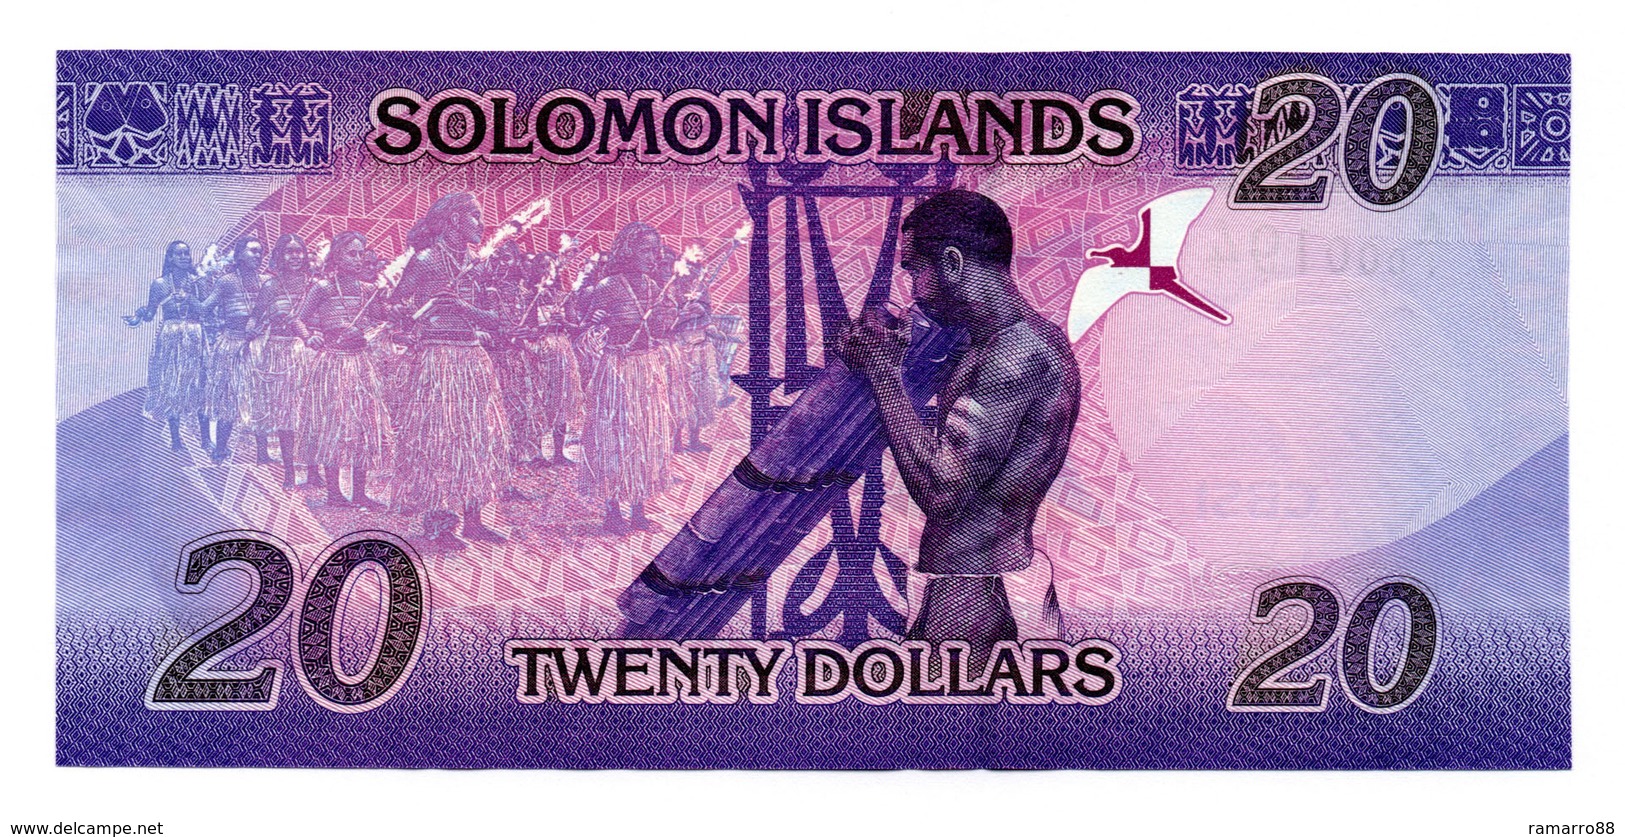 Solomon Islands 20 Dollars 2017 Pick # 34 Very Low Serial # A/1 000194 Unc - Solomonen